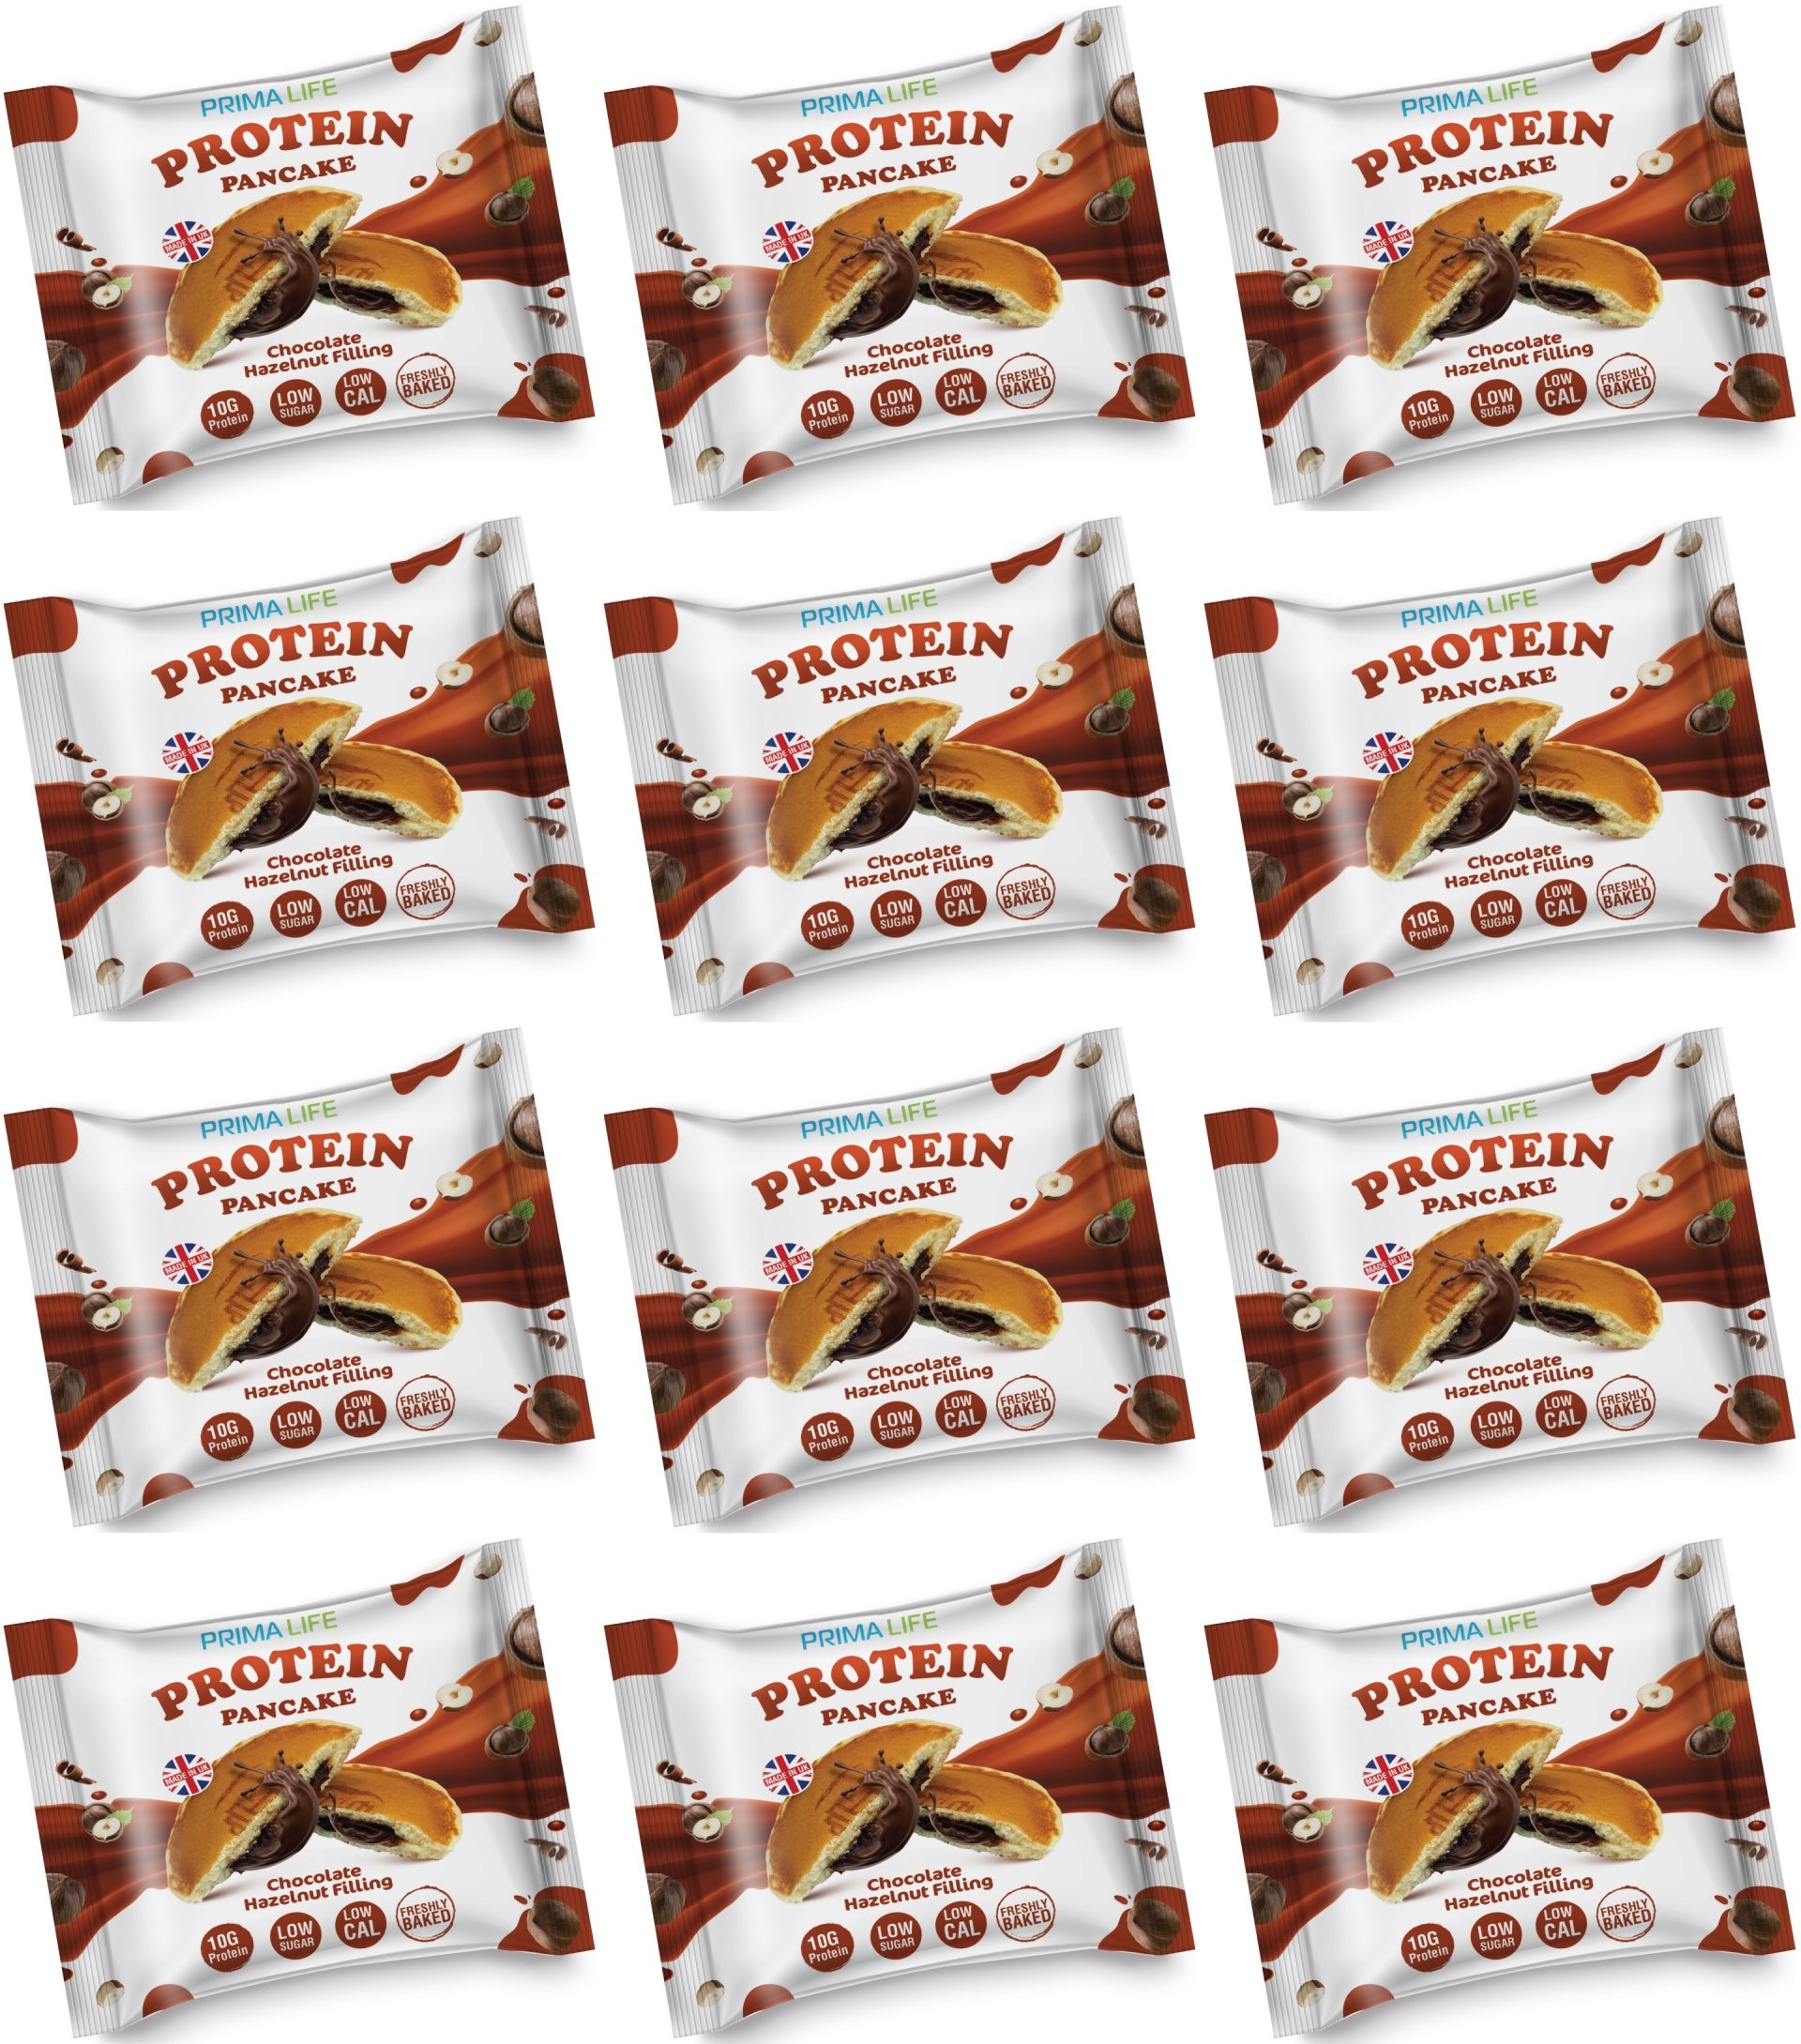 #Flavor_Chocolate Hazelnut #Size_12-Pack